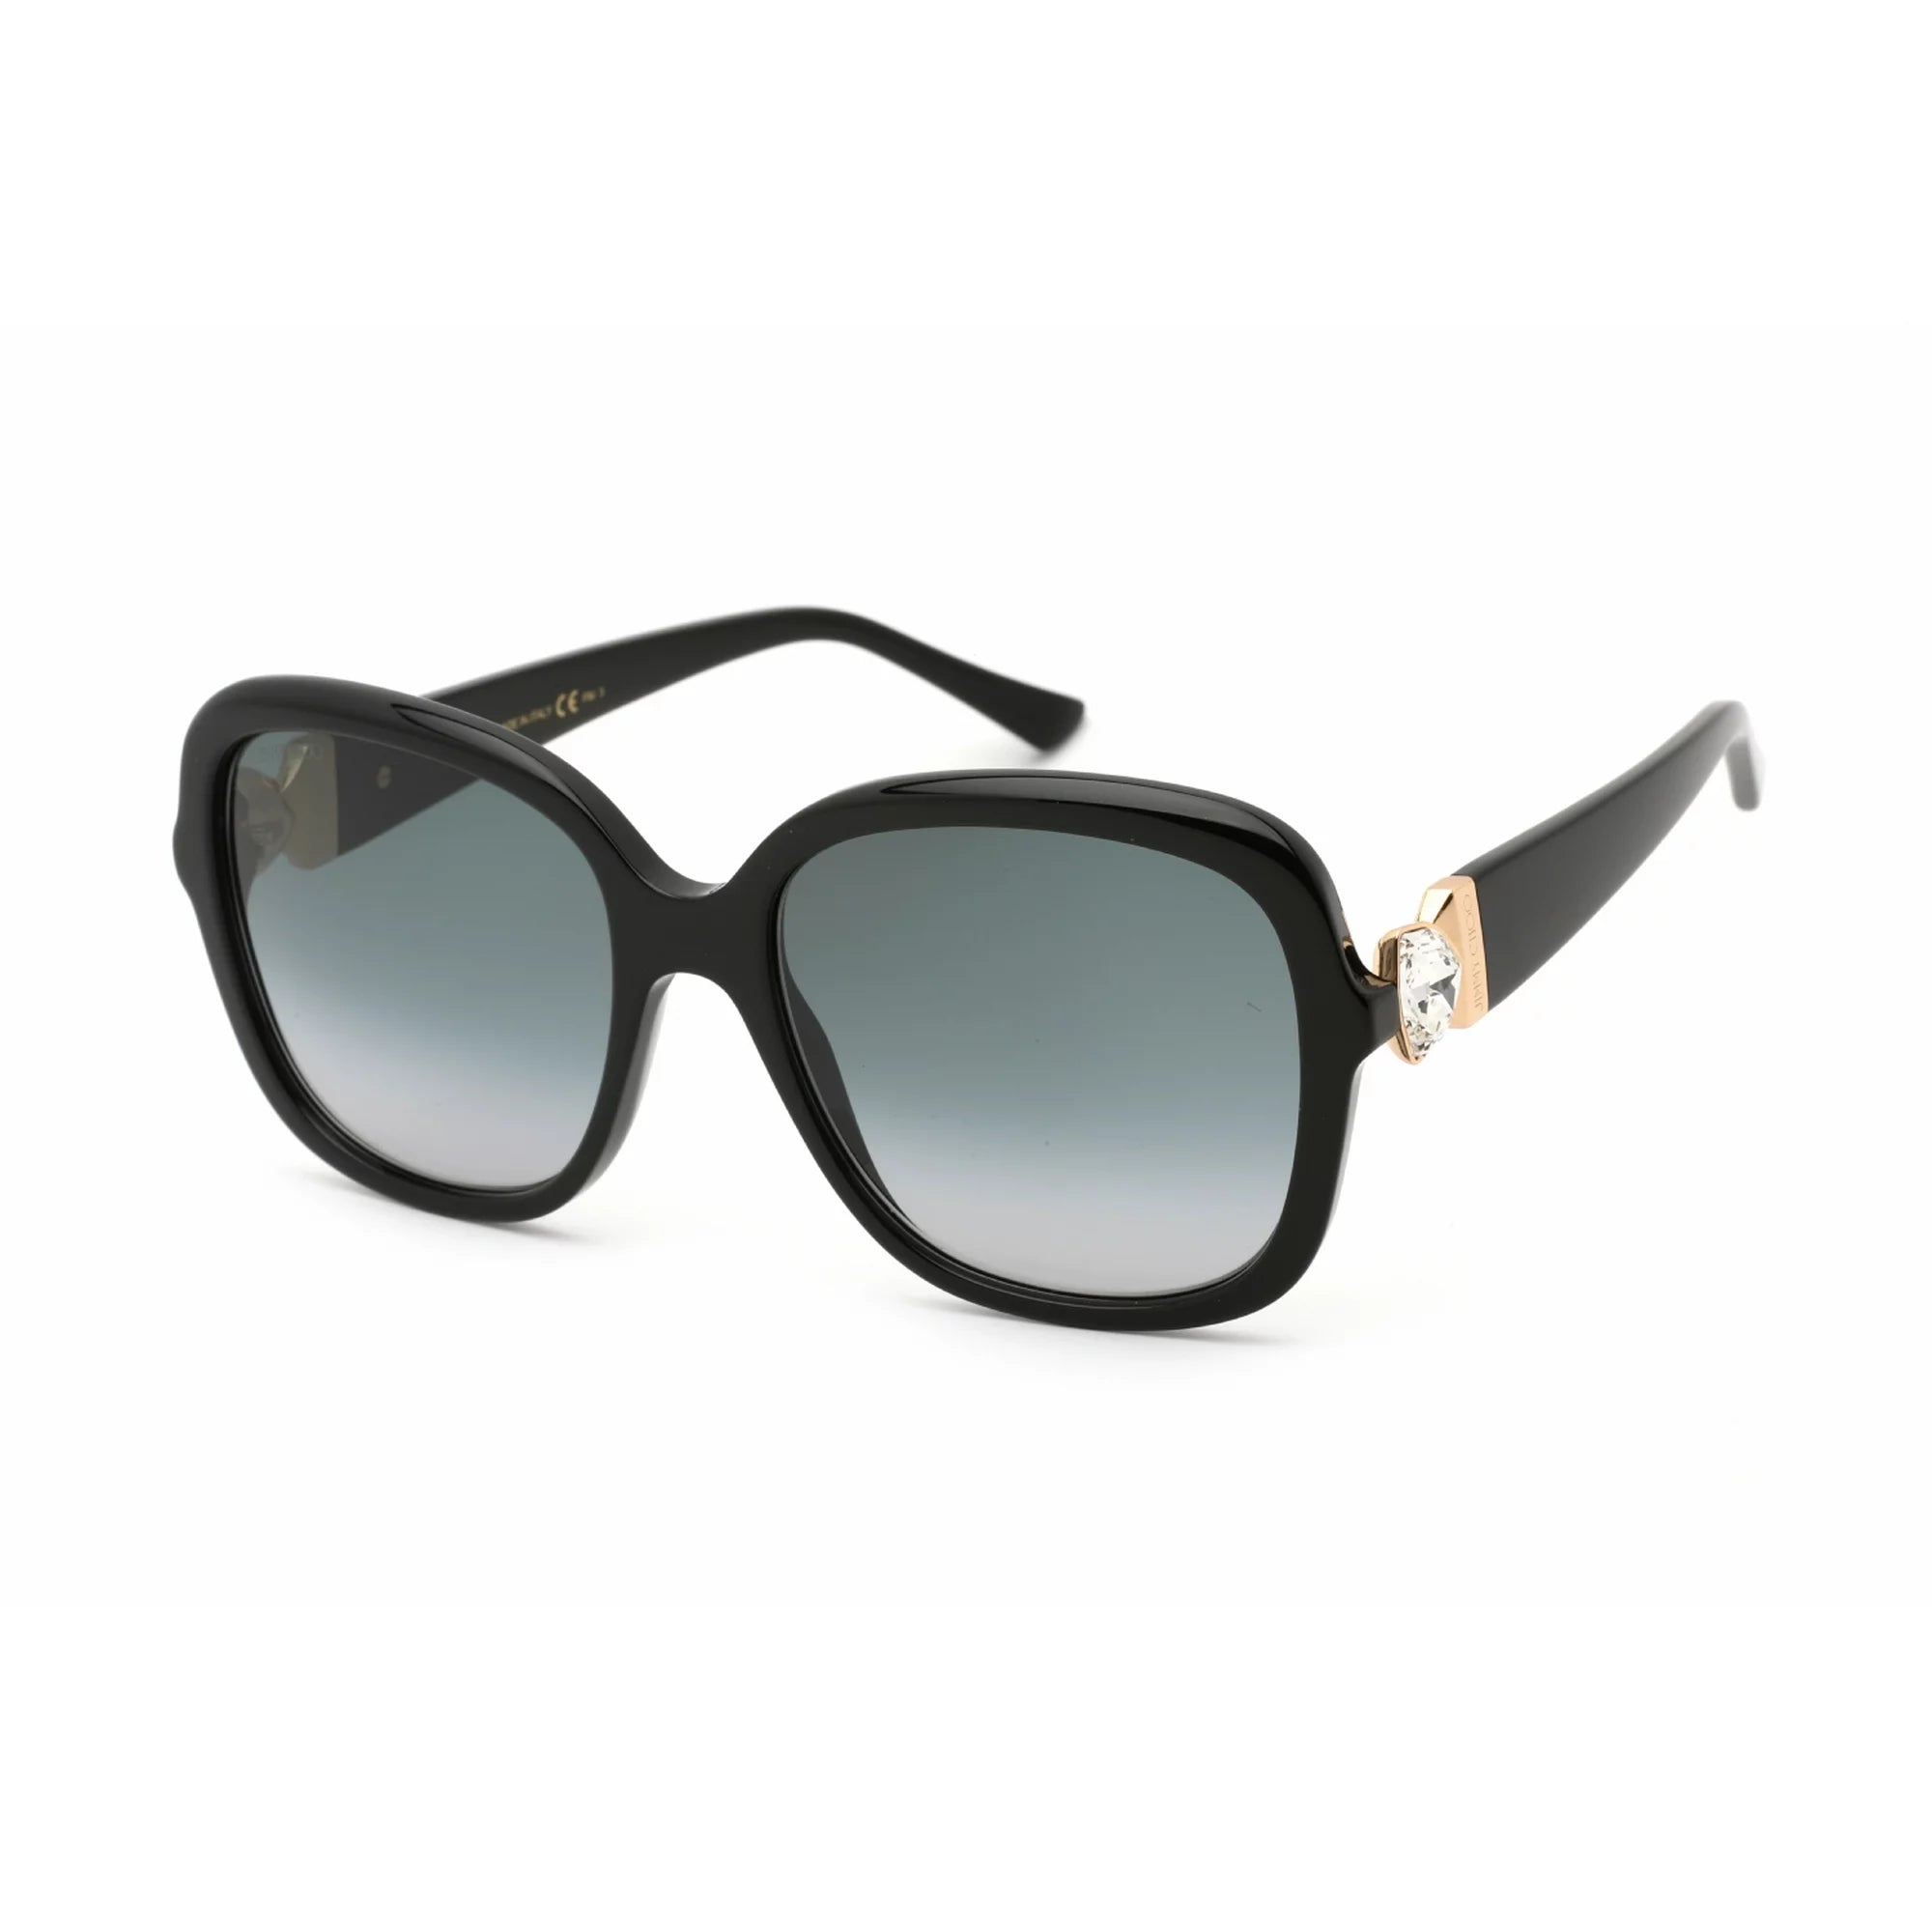 Jimmy Choo SADIE/S 0807 Women's Black Square Frame Sunglasses